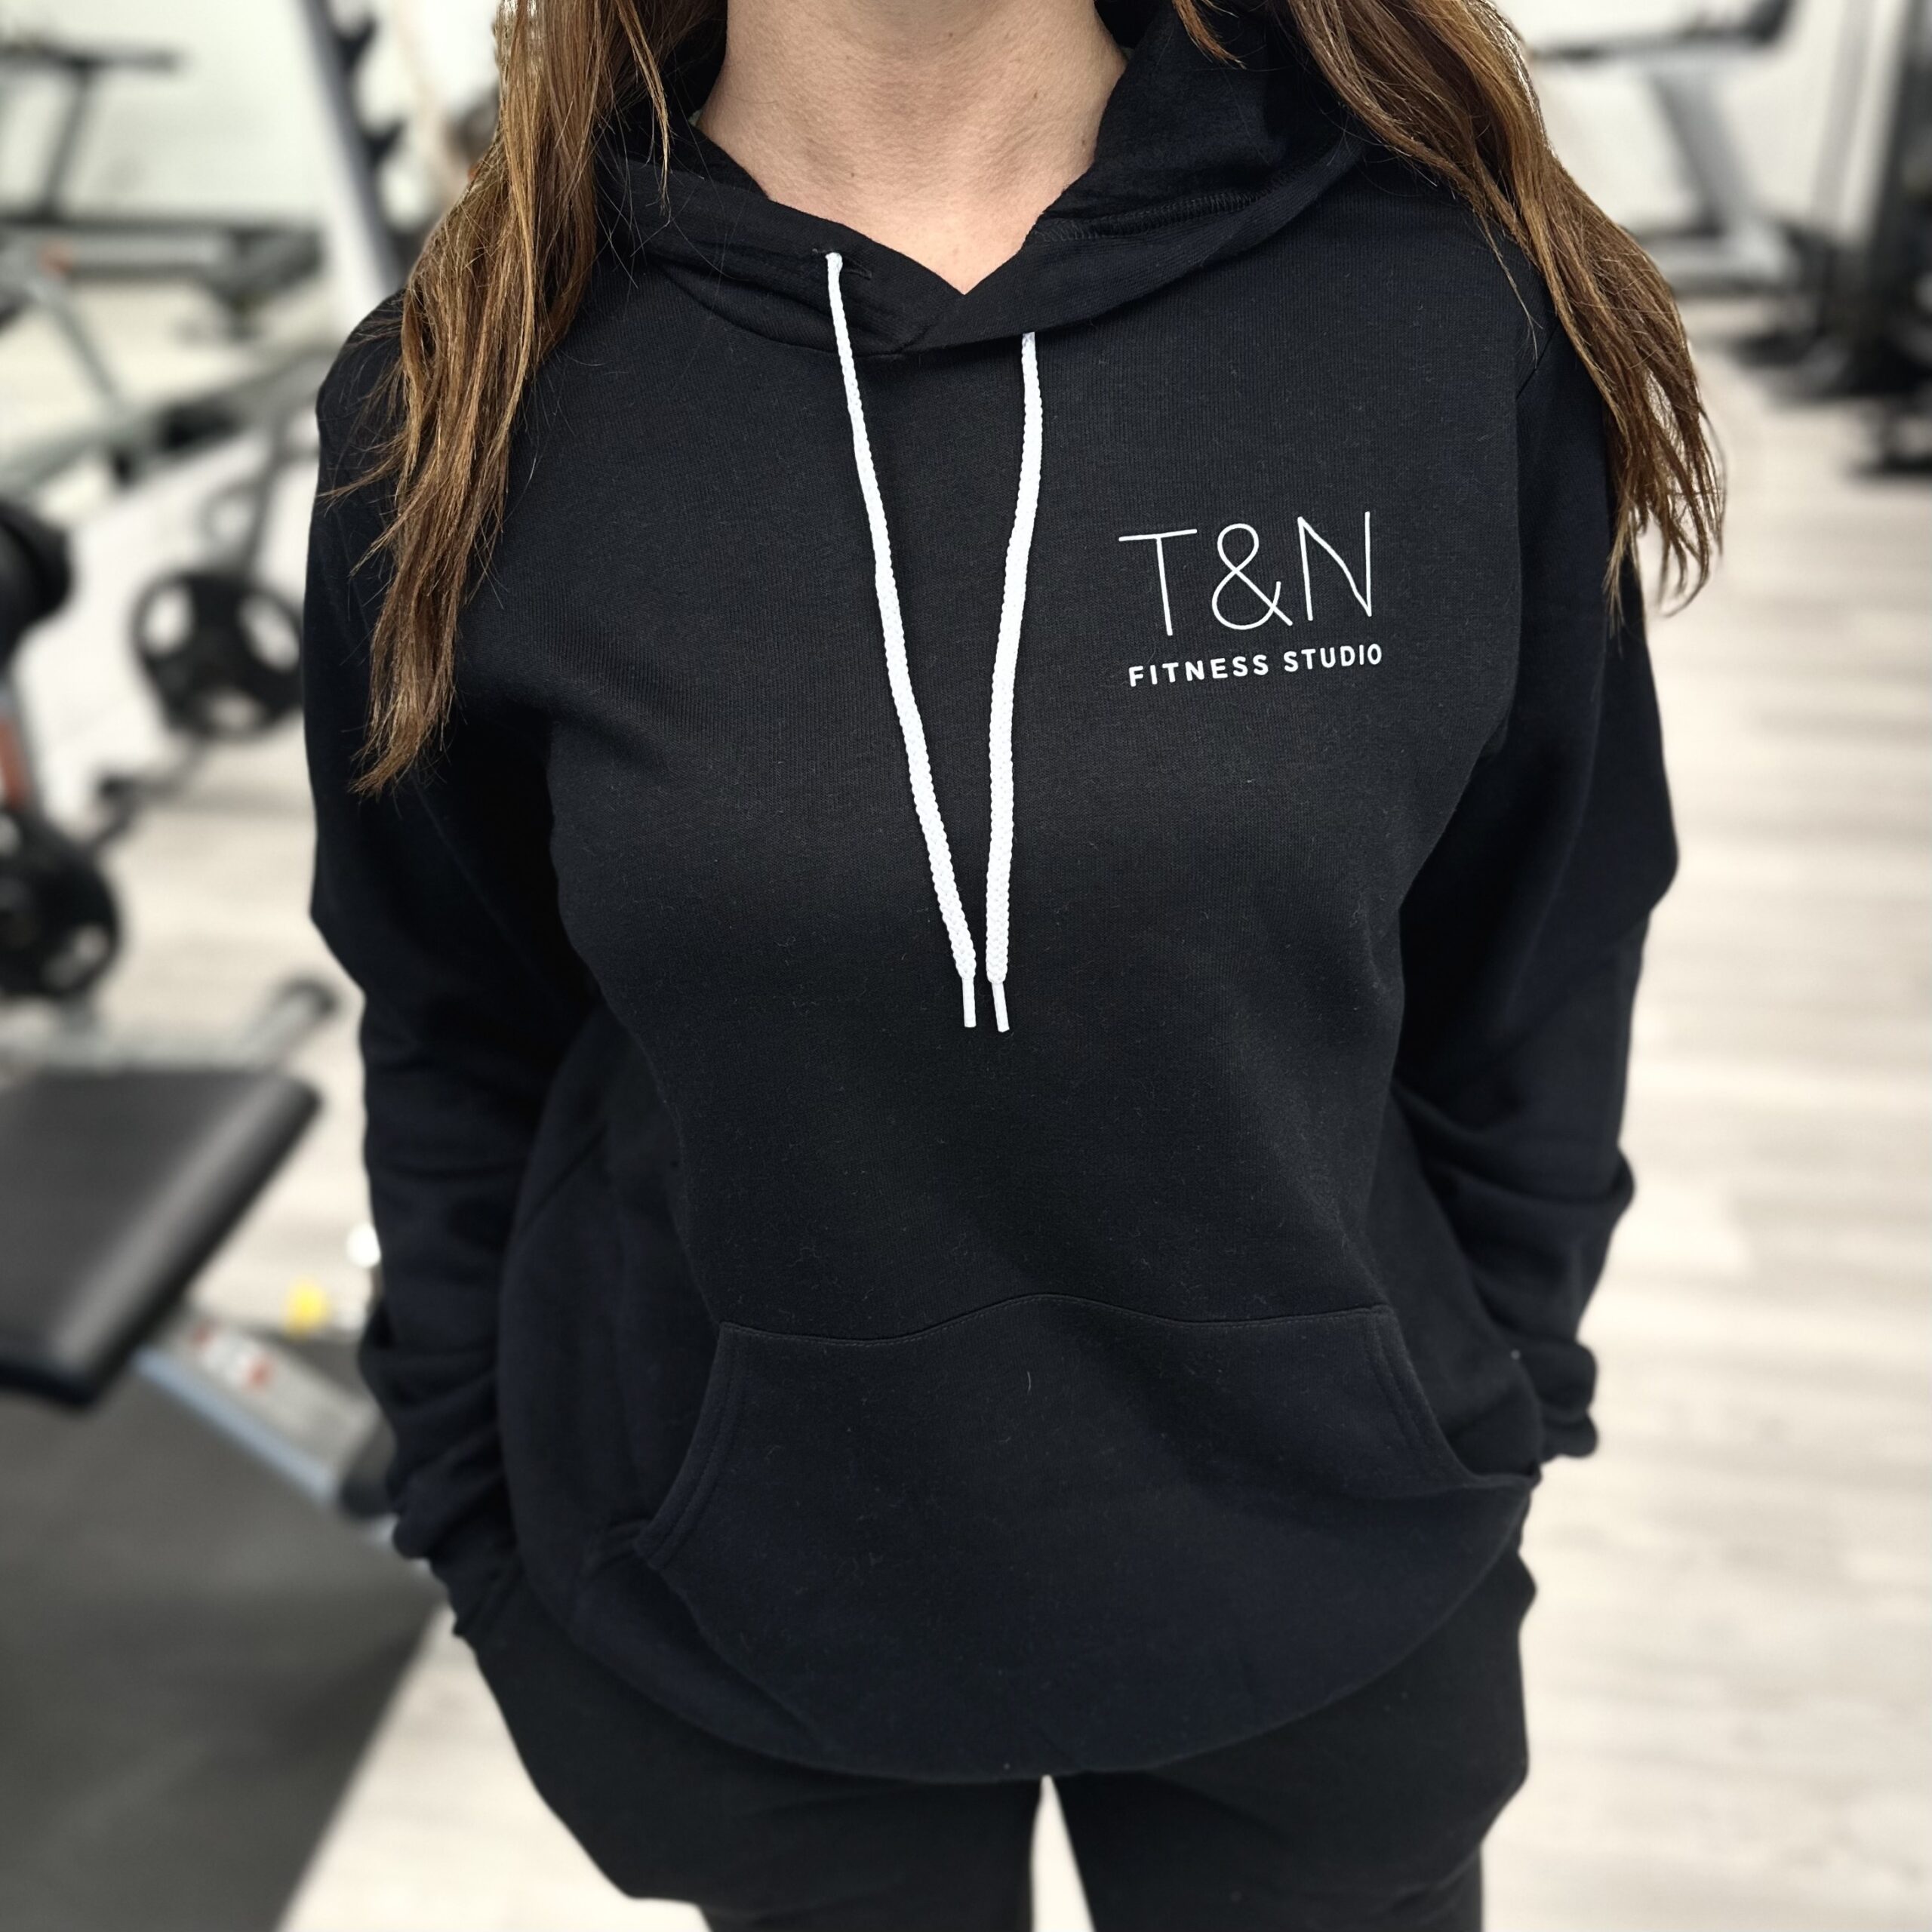 A woman wearing a black hoodie in a fitness studio